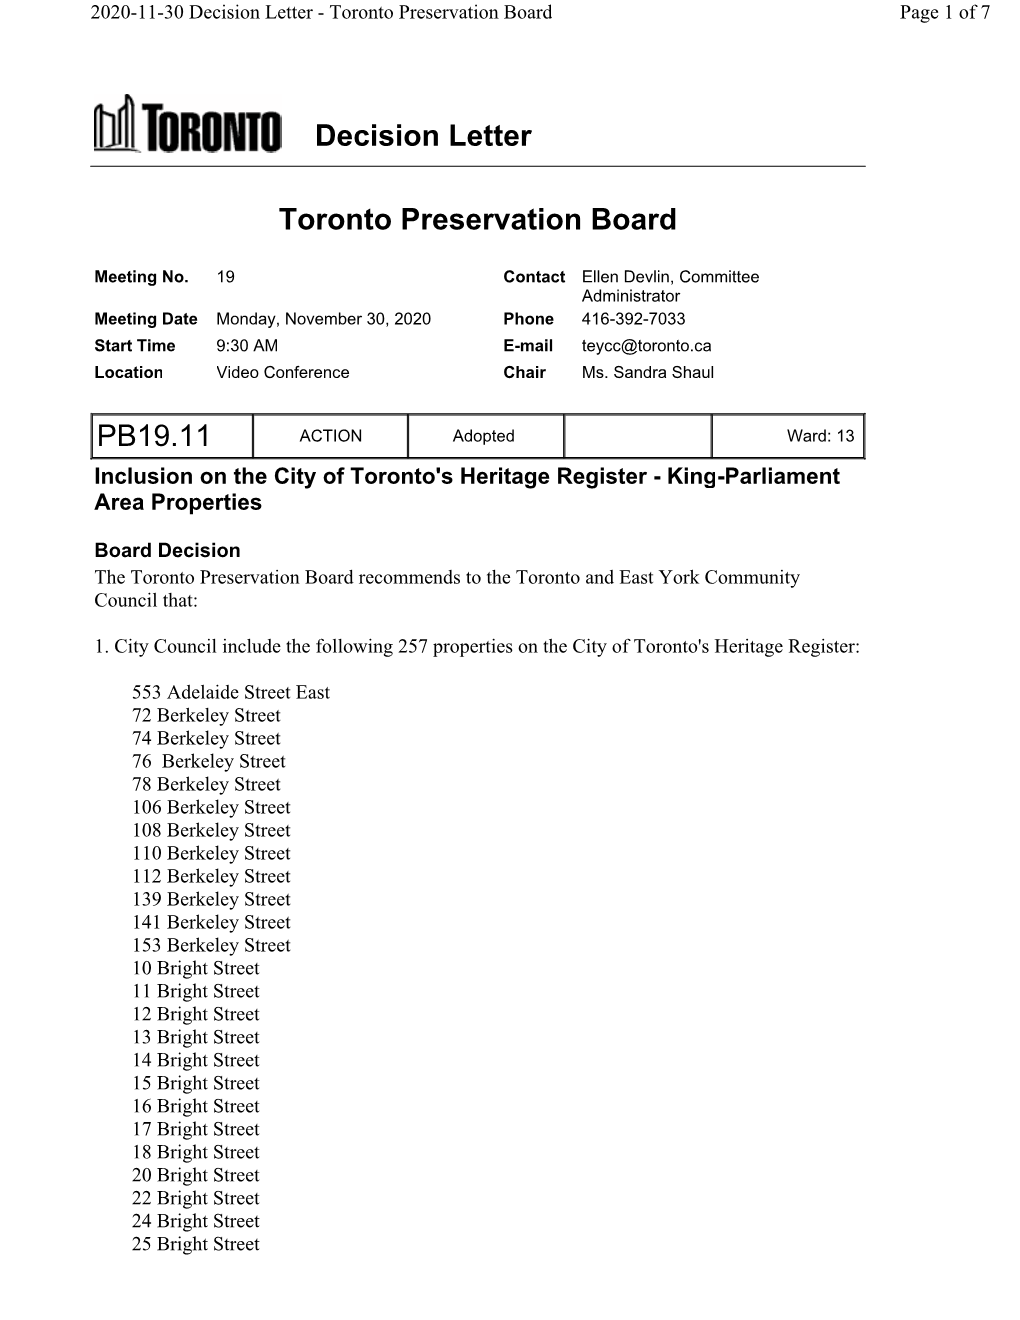 Decision Letter Toronto Preservation Board PB19.11